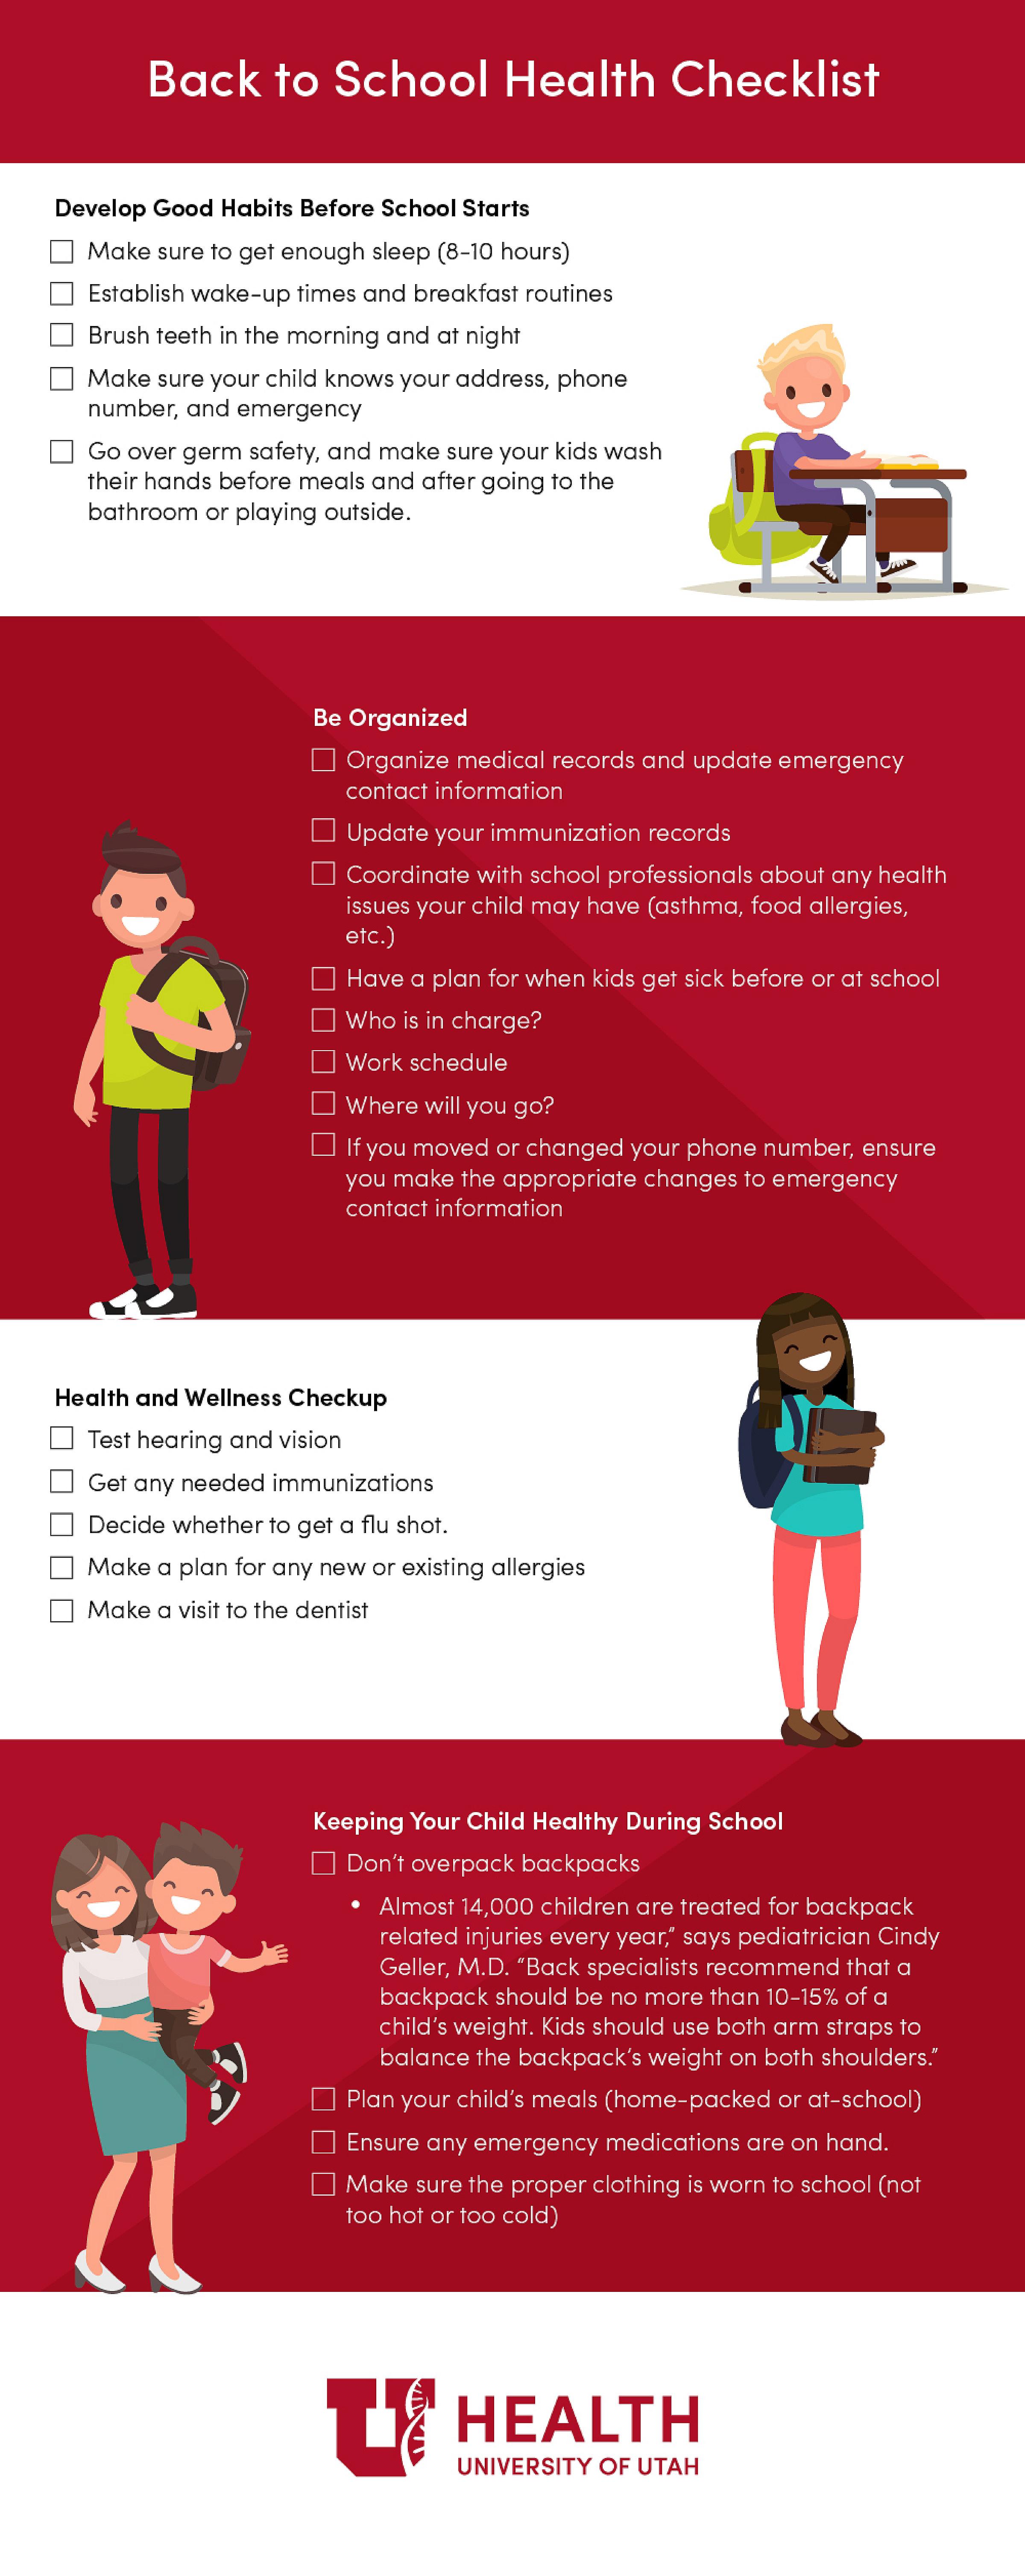 back-to-school-checklist-university-of-utah-health-university-of